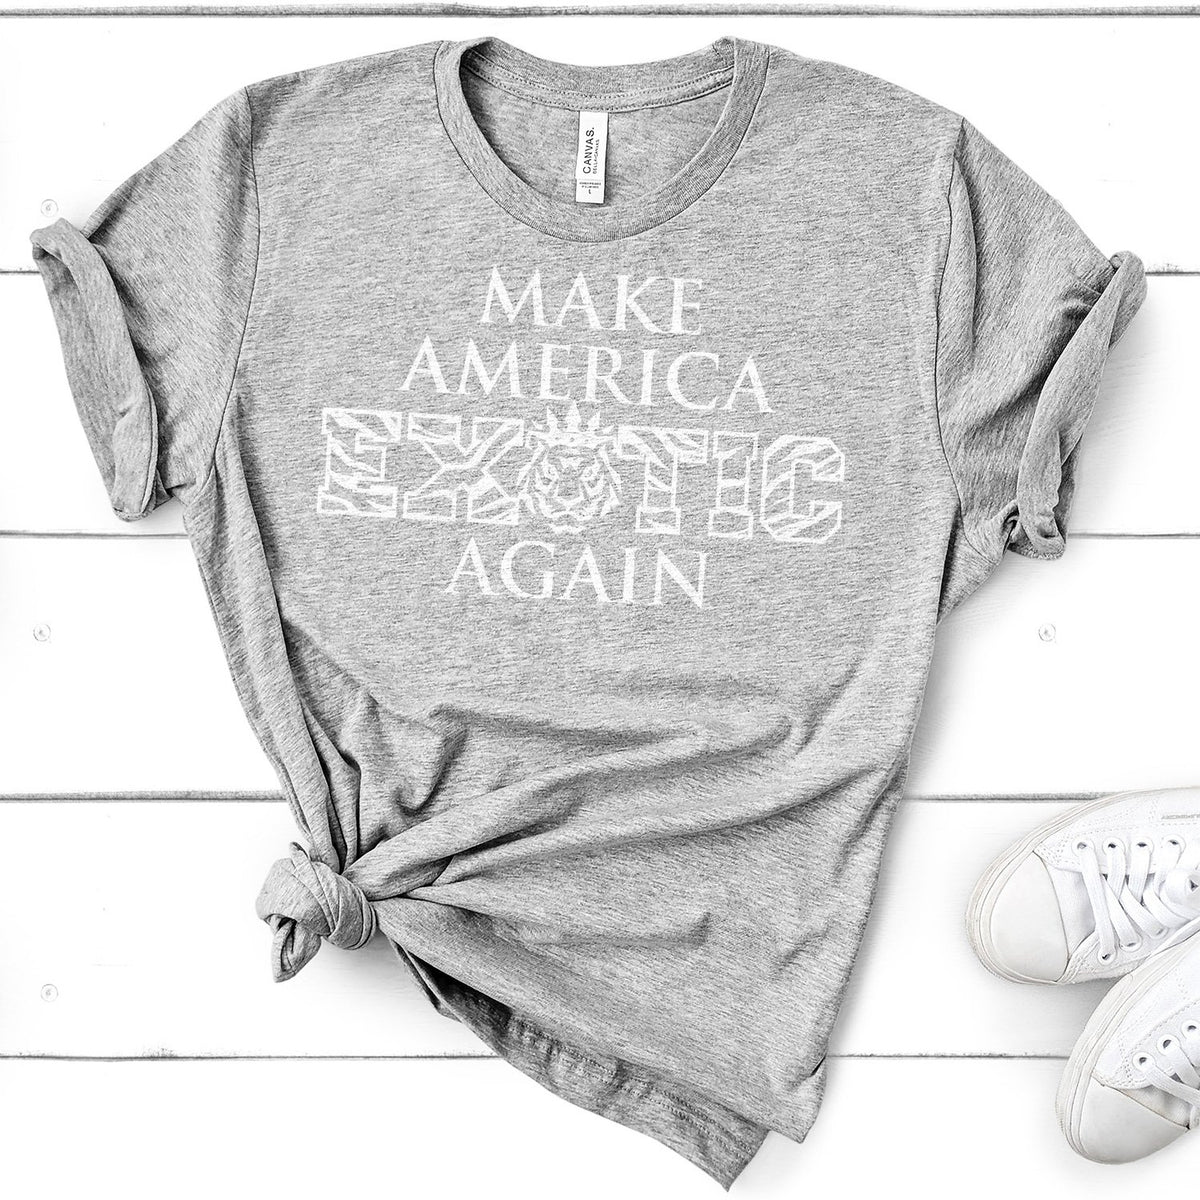 Make America Exotic Again - Short Sleeve Tee Shirt